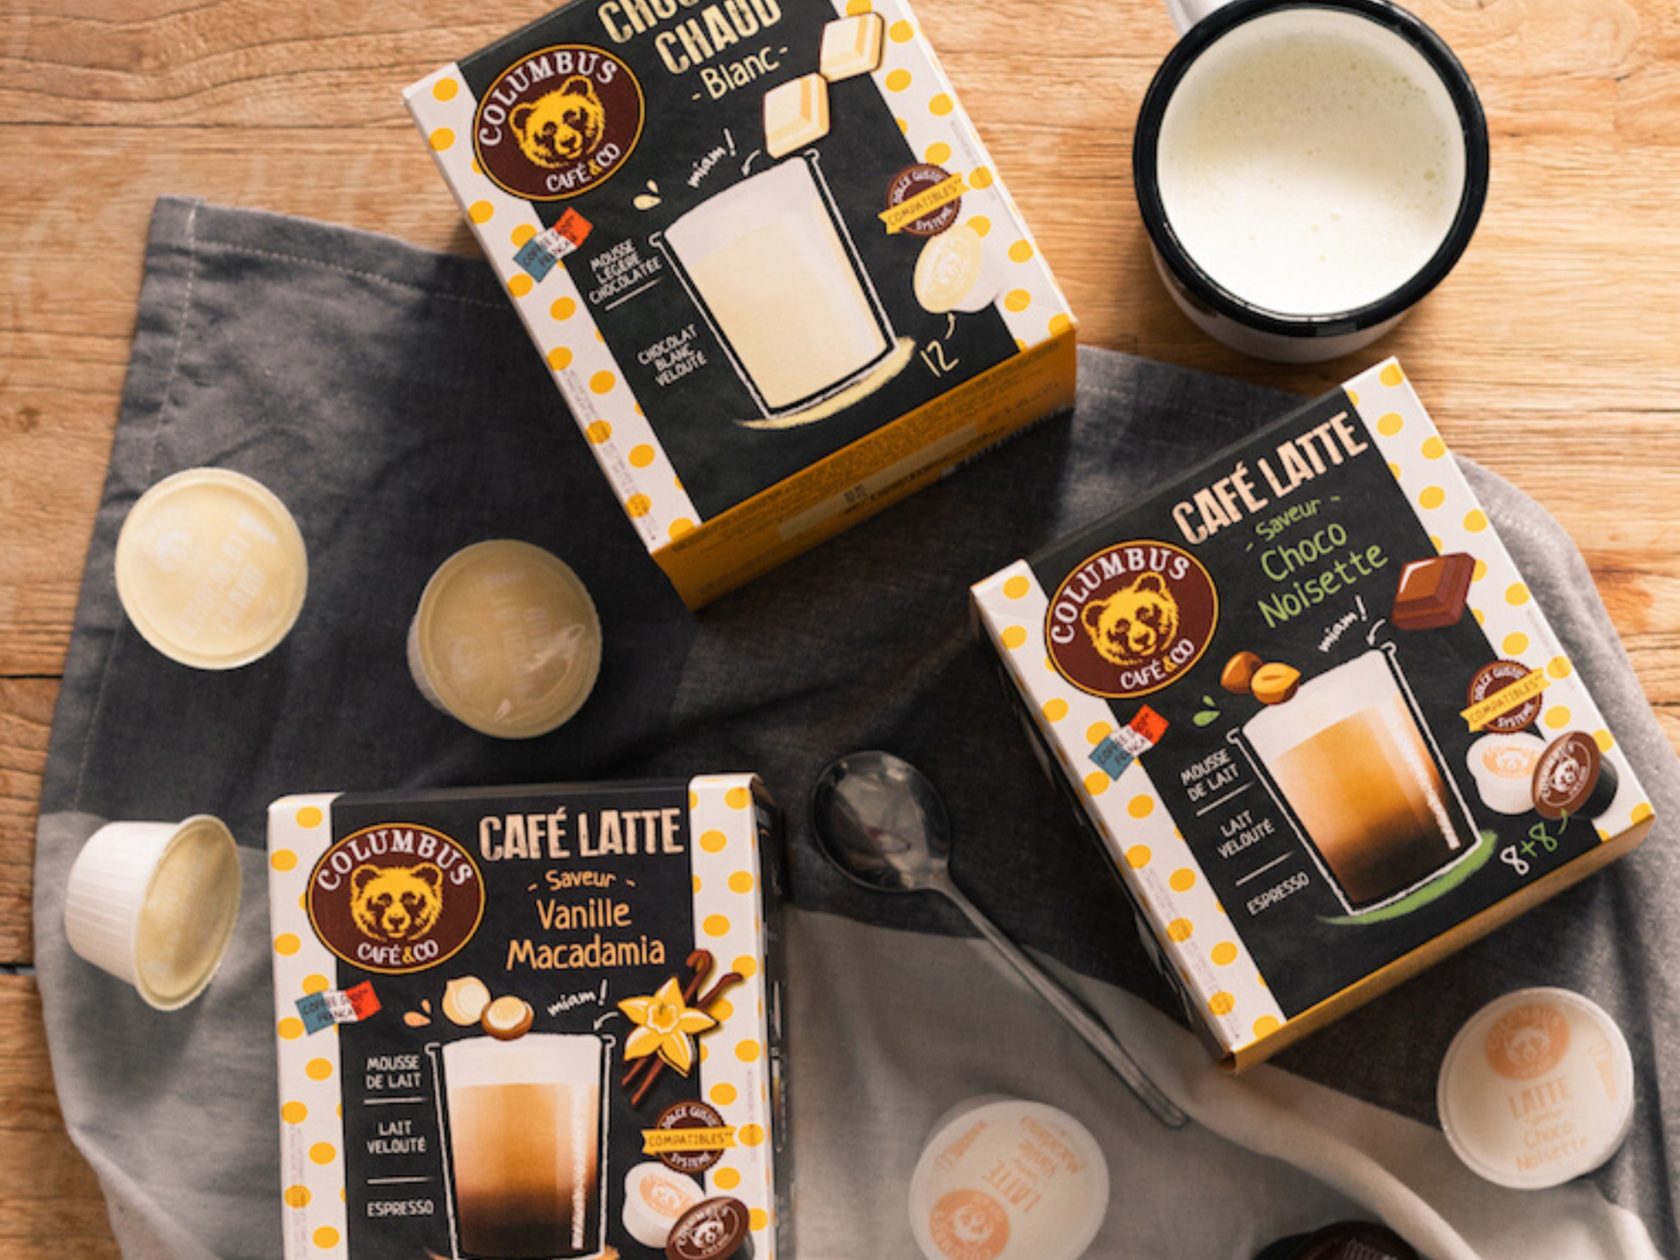 Le Café Latte saveur Framboise Choco blanc Dolce Gusto® x 16